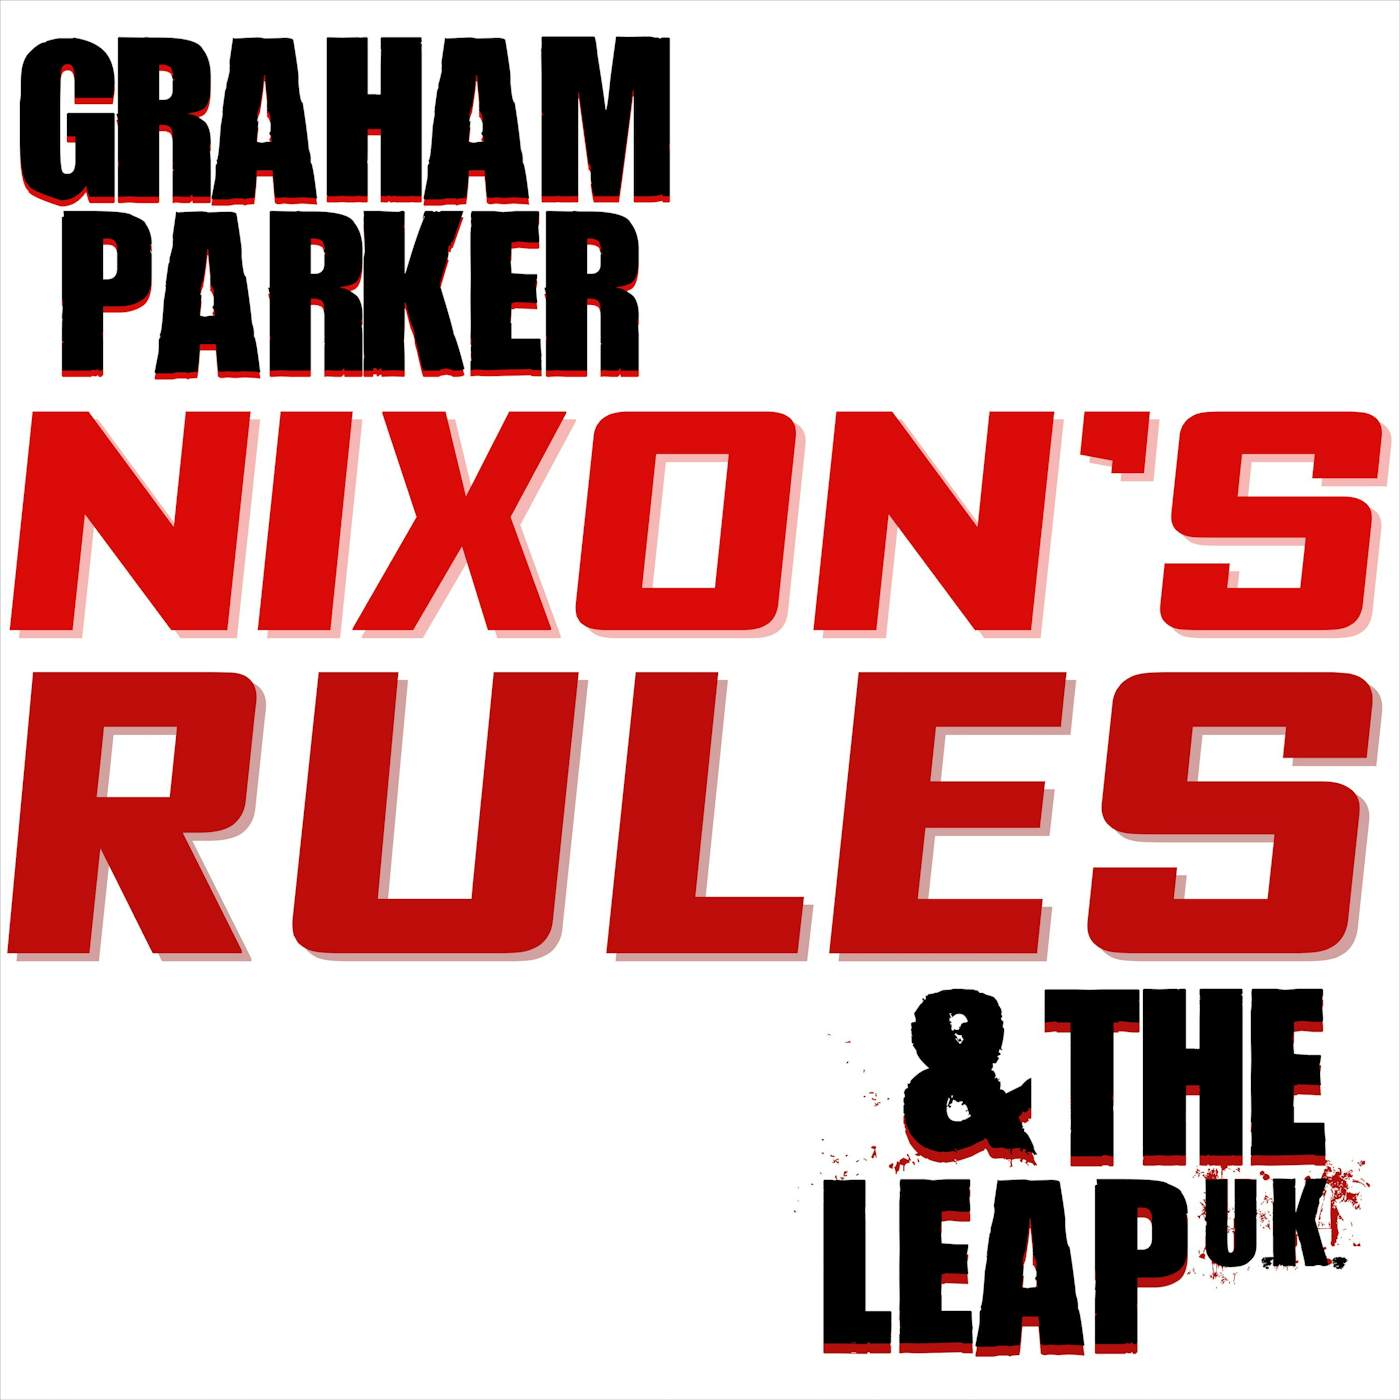 Graham Parker Nixon's Rules - 7" (Vinyl)